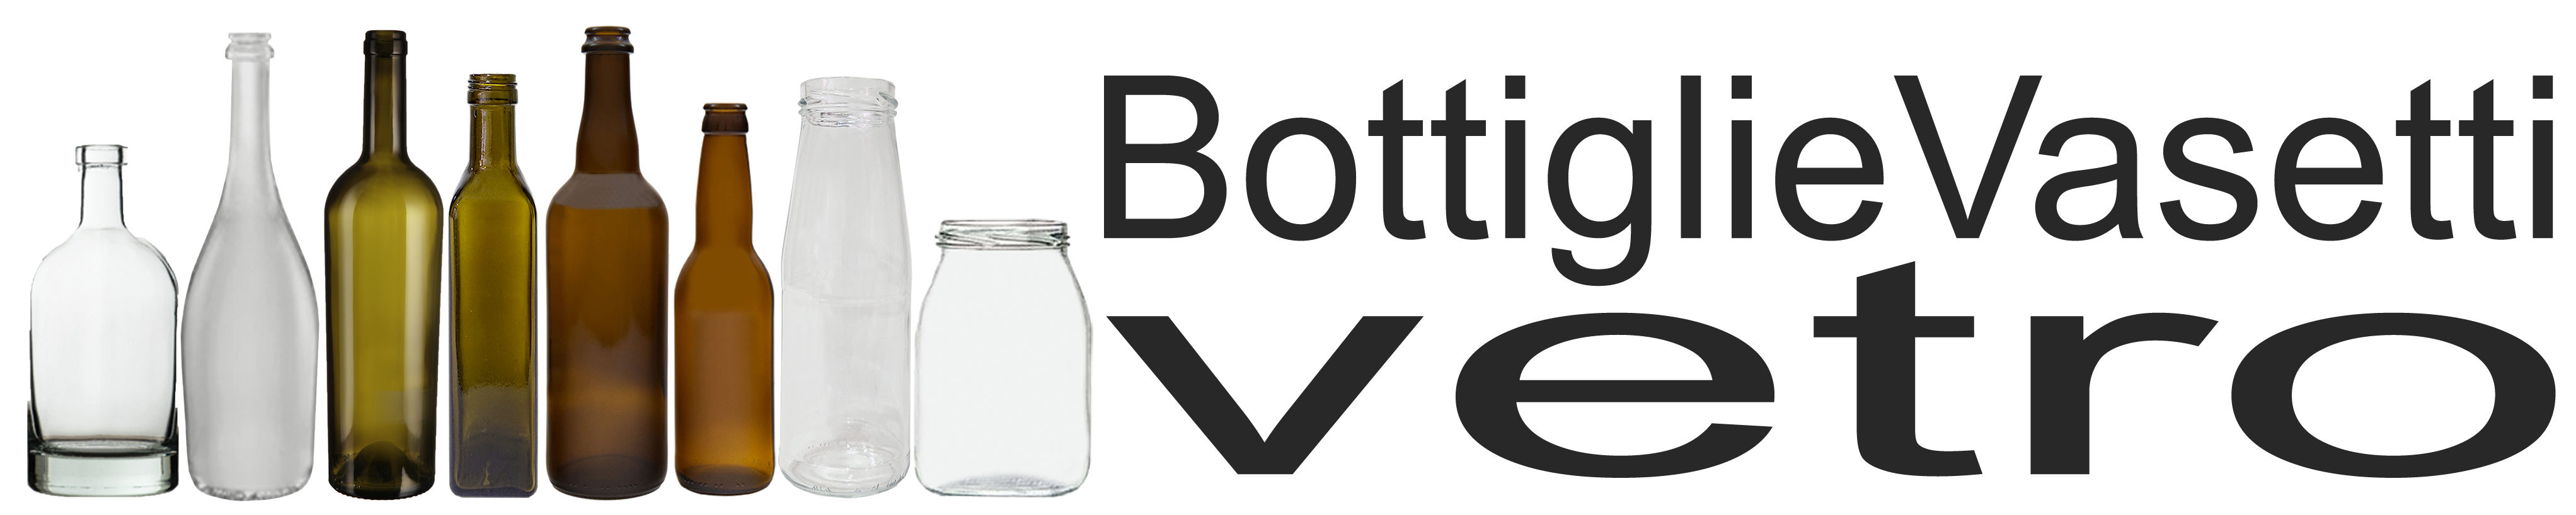 Bottiglie e vasetti in vetro